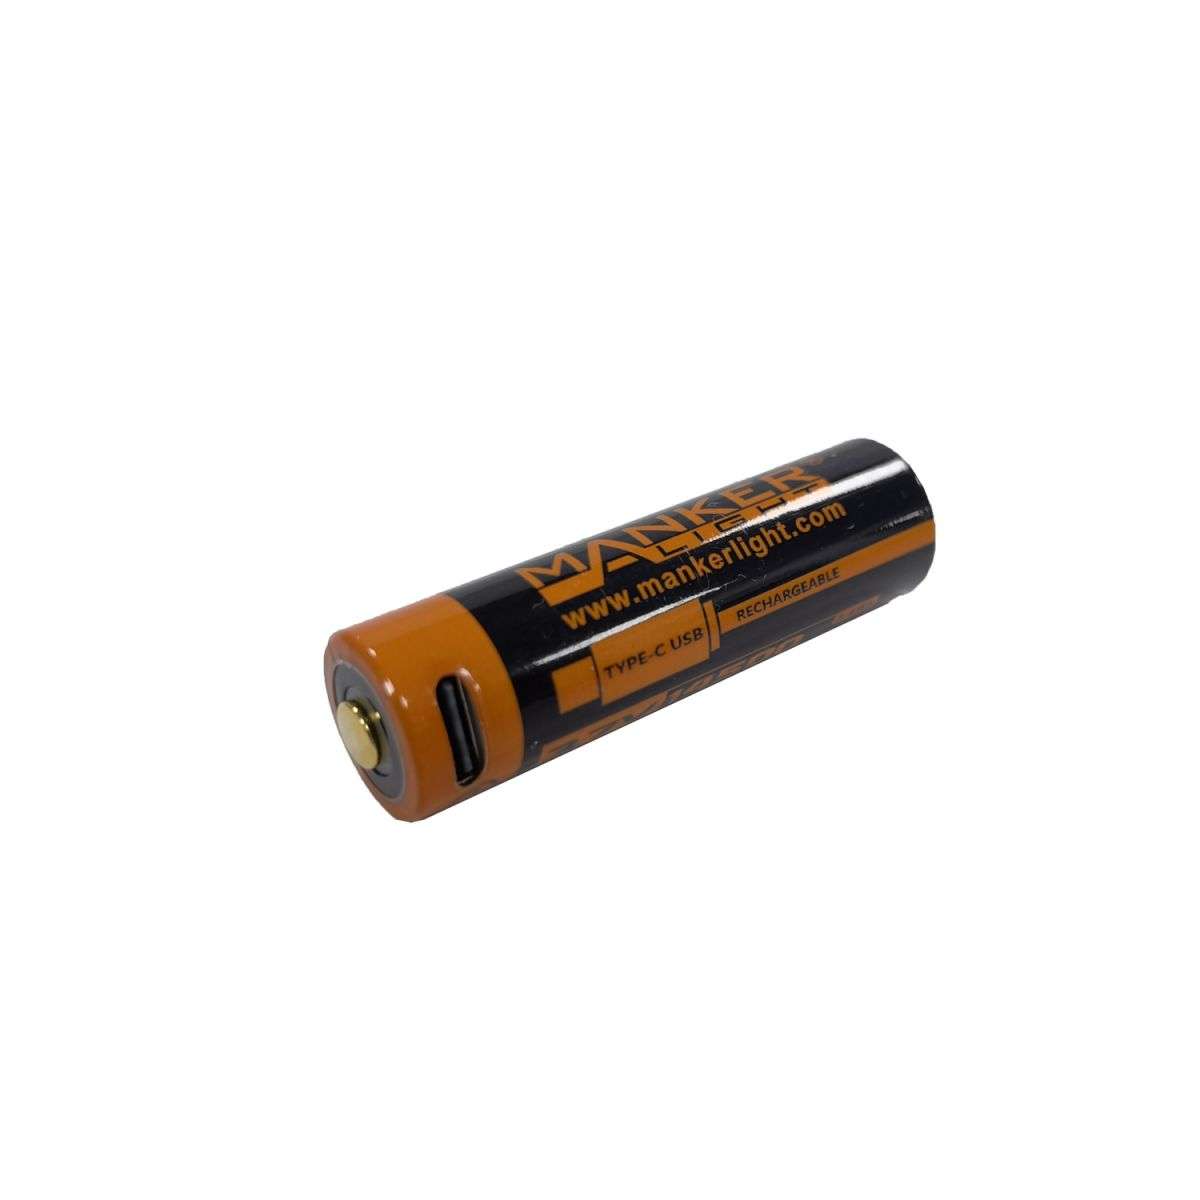 920mAh Type-C USB 14500 Battery